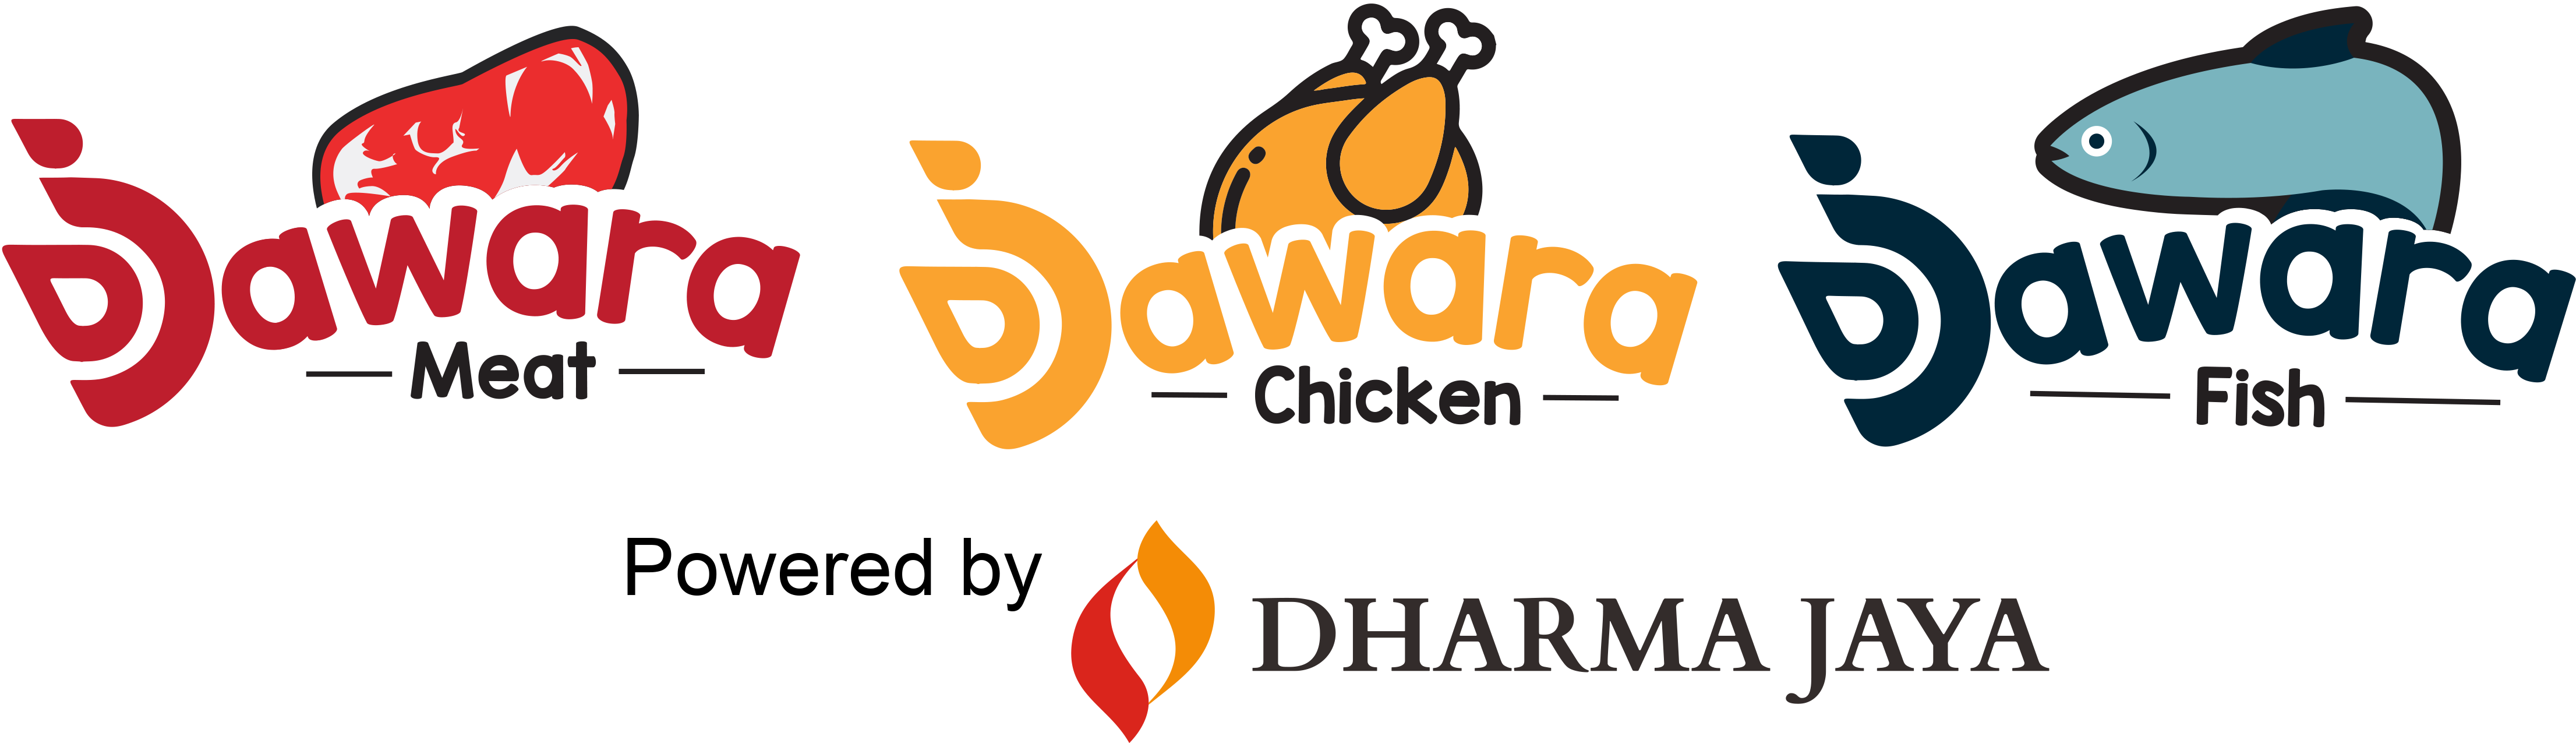 Djawara Meat